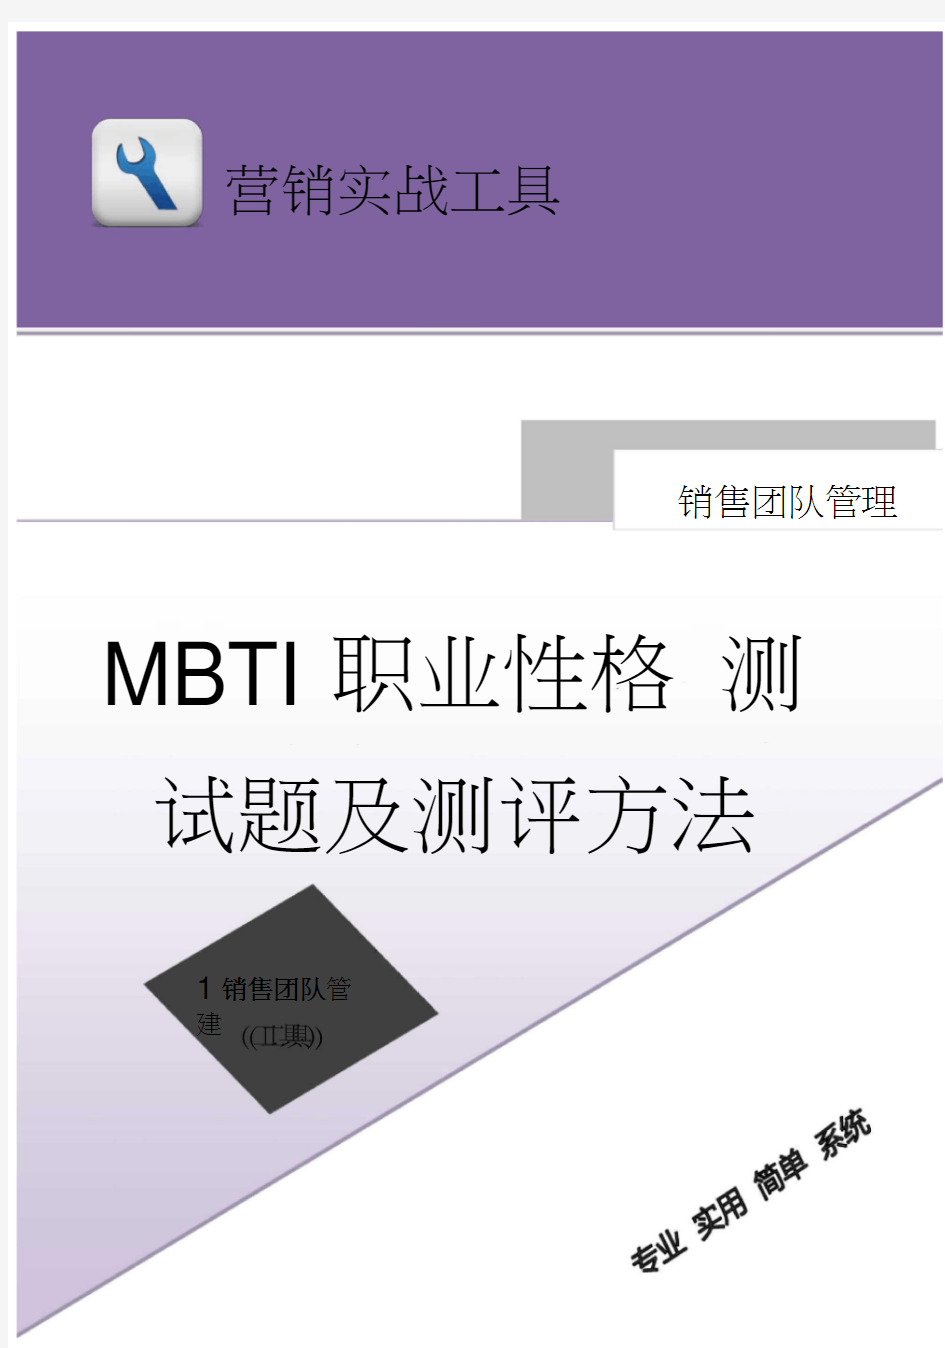 MBTI职业性格测试题及测评方法